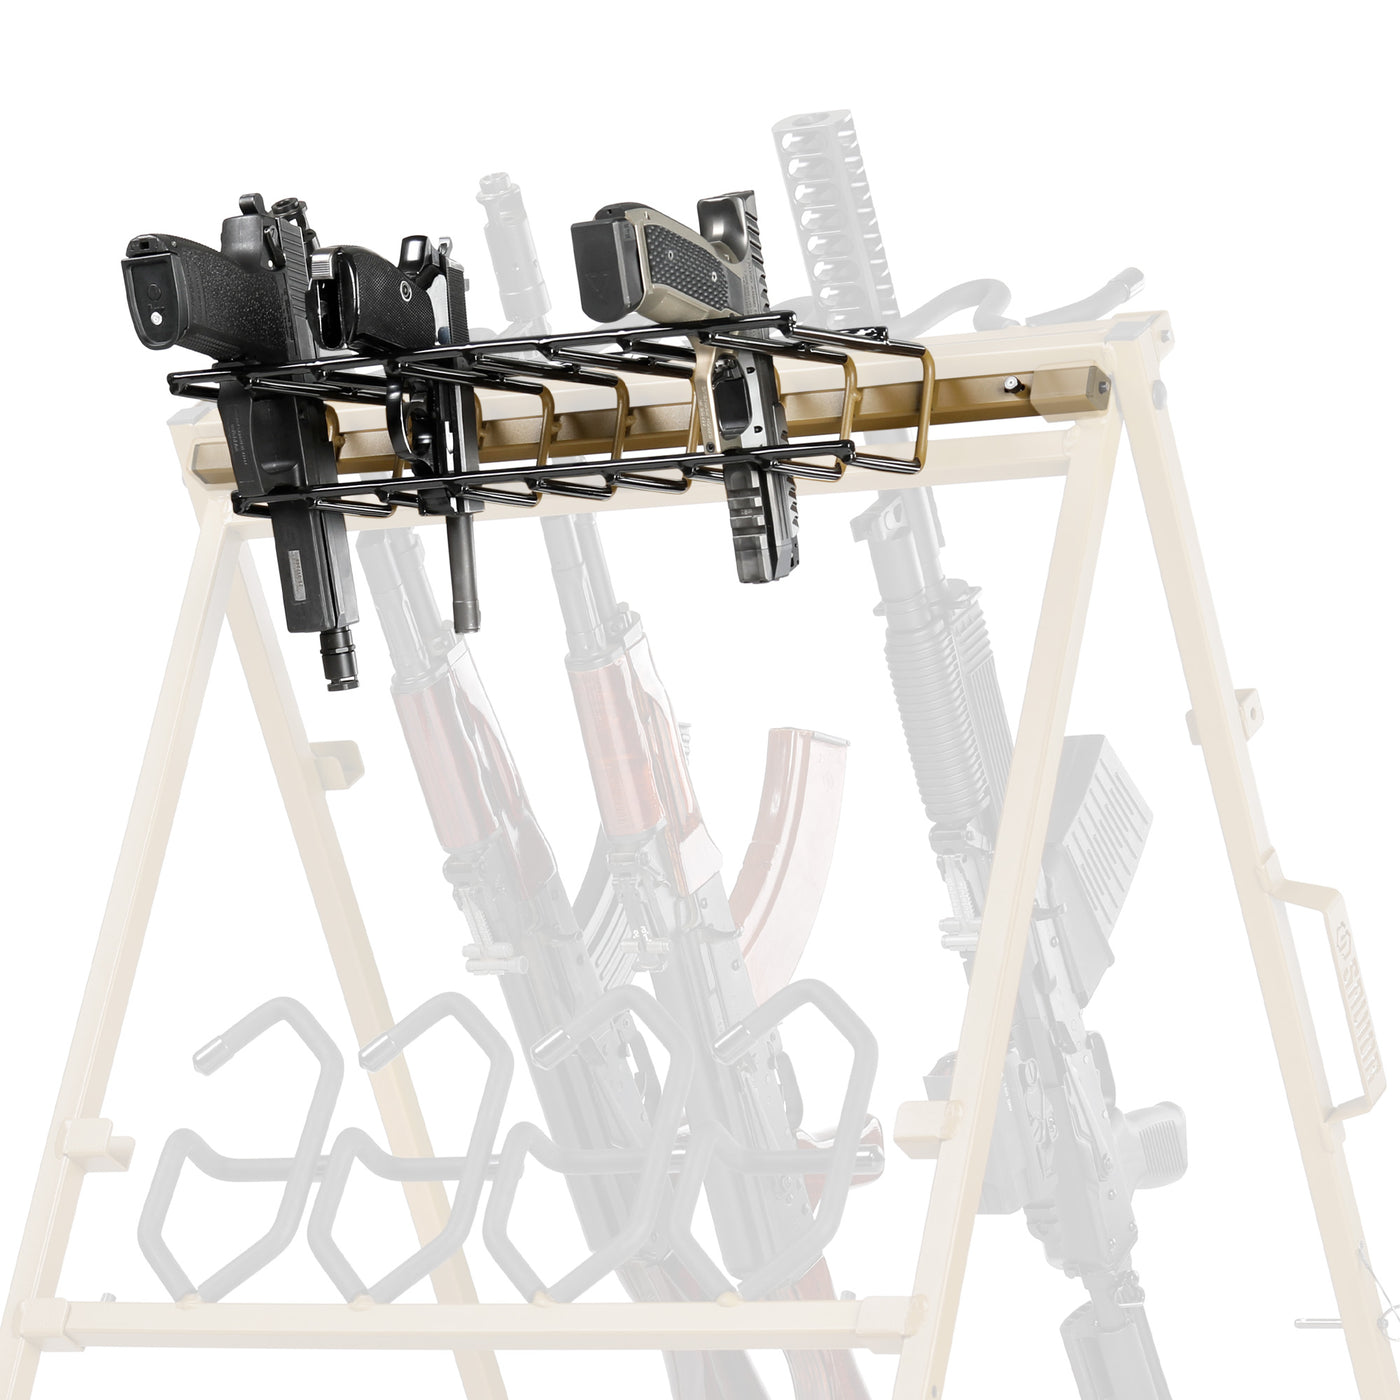 Pistol Rack Attachment for Shorty Rifle Rack - 8 Slots